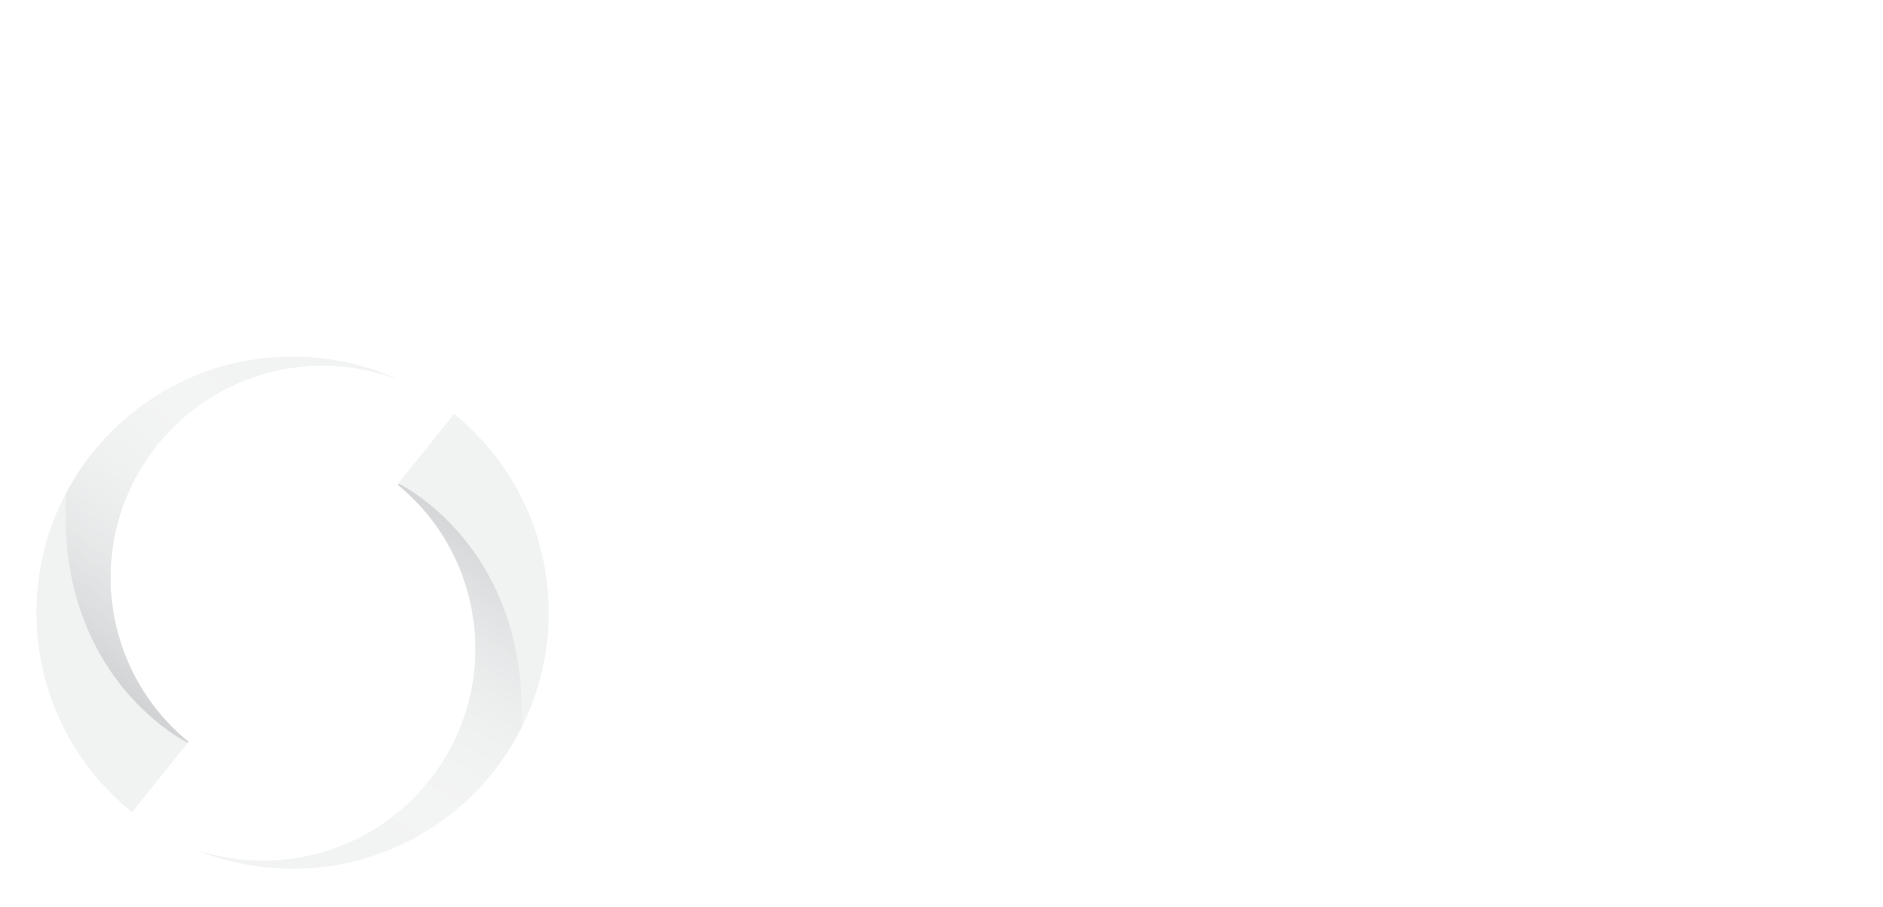 Nsula-swish-logo